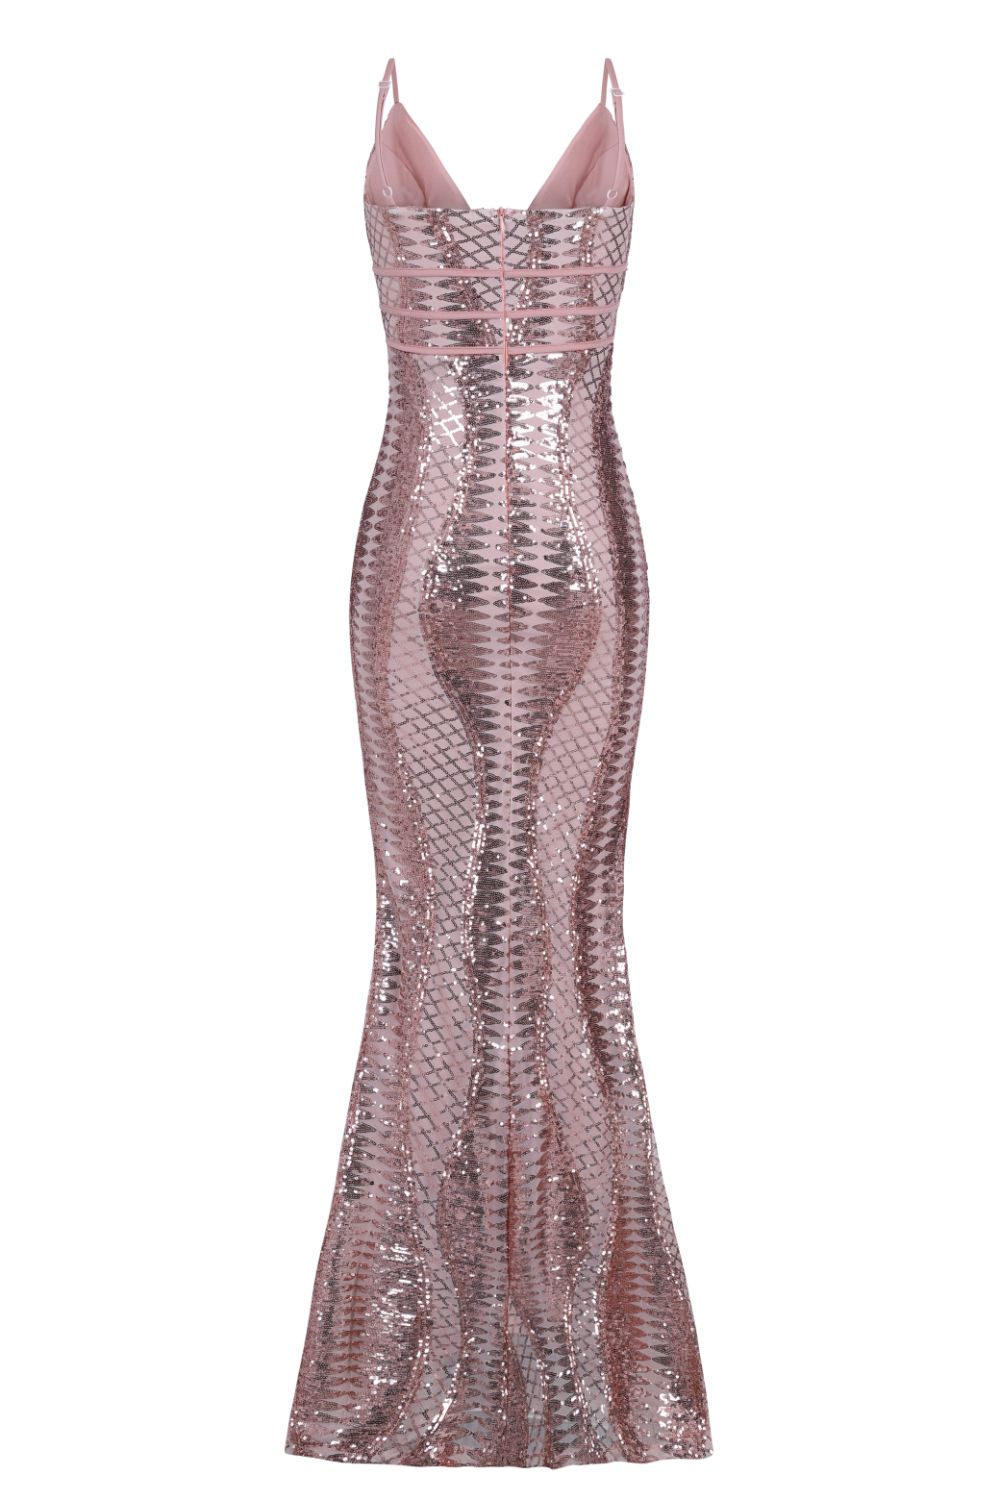 Virgo Rose Gold Plunge Cage Sequin Bandage Illusion Maxi Dress